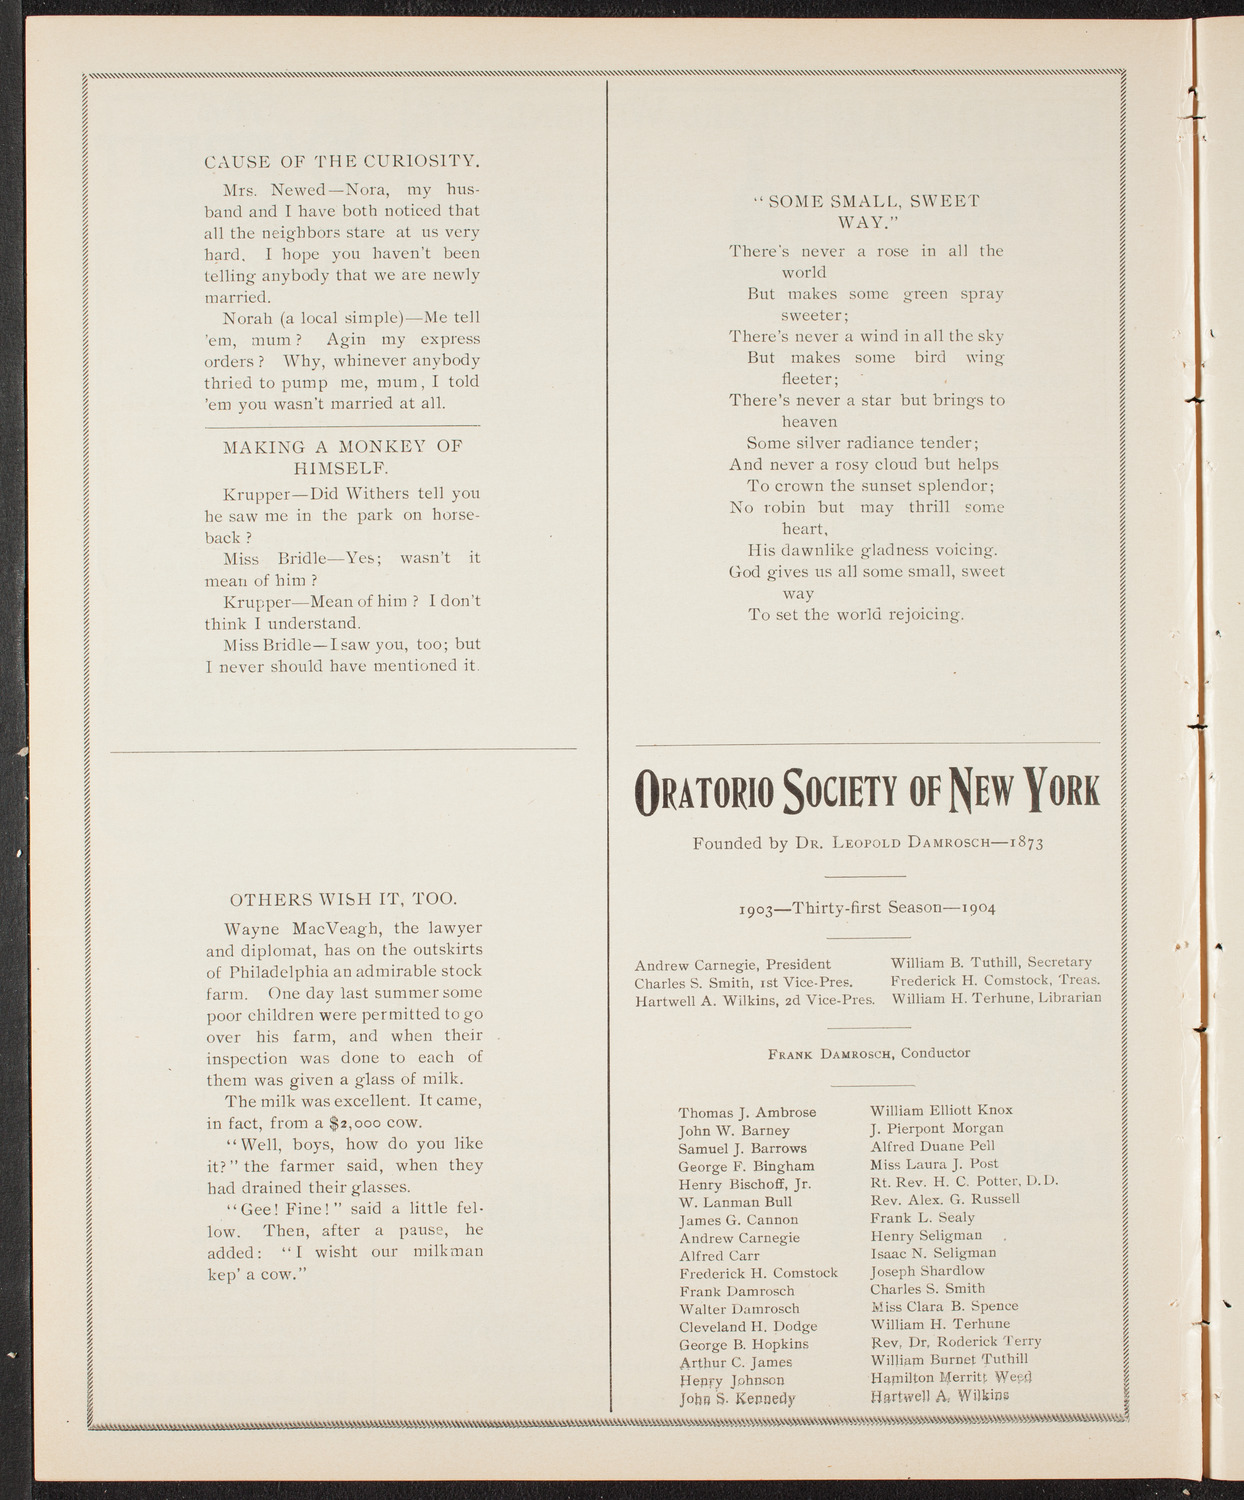 Lund University Swedish Student Chorus, June 19, 1904, program page 8